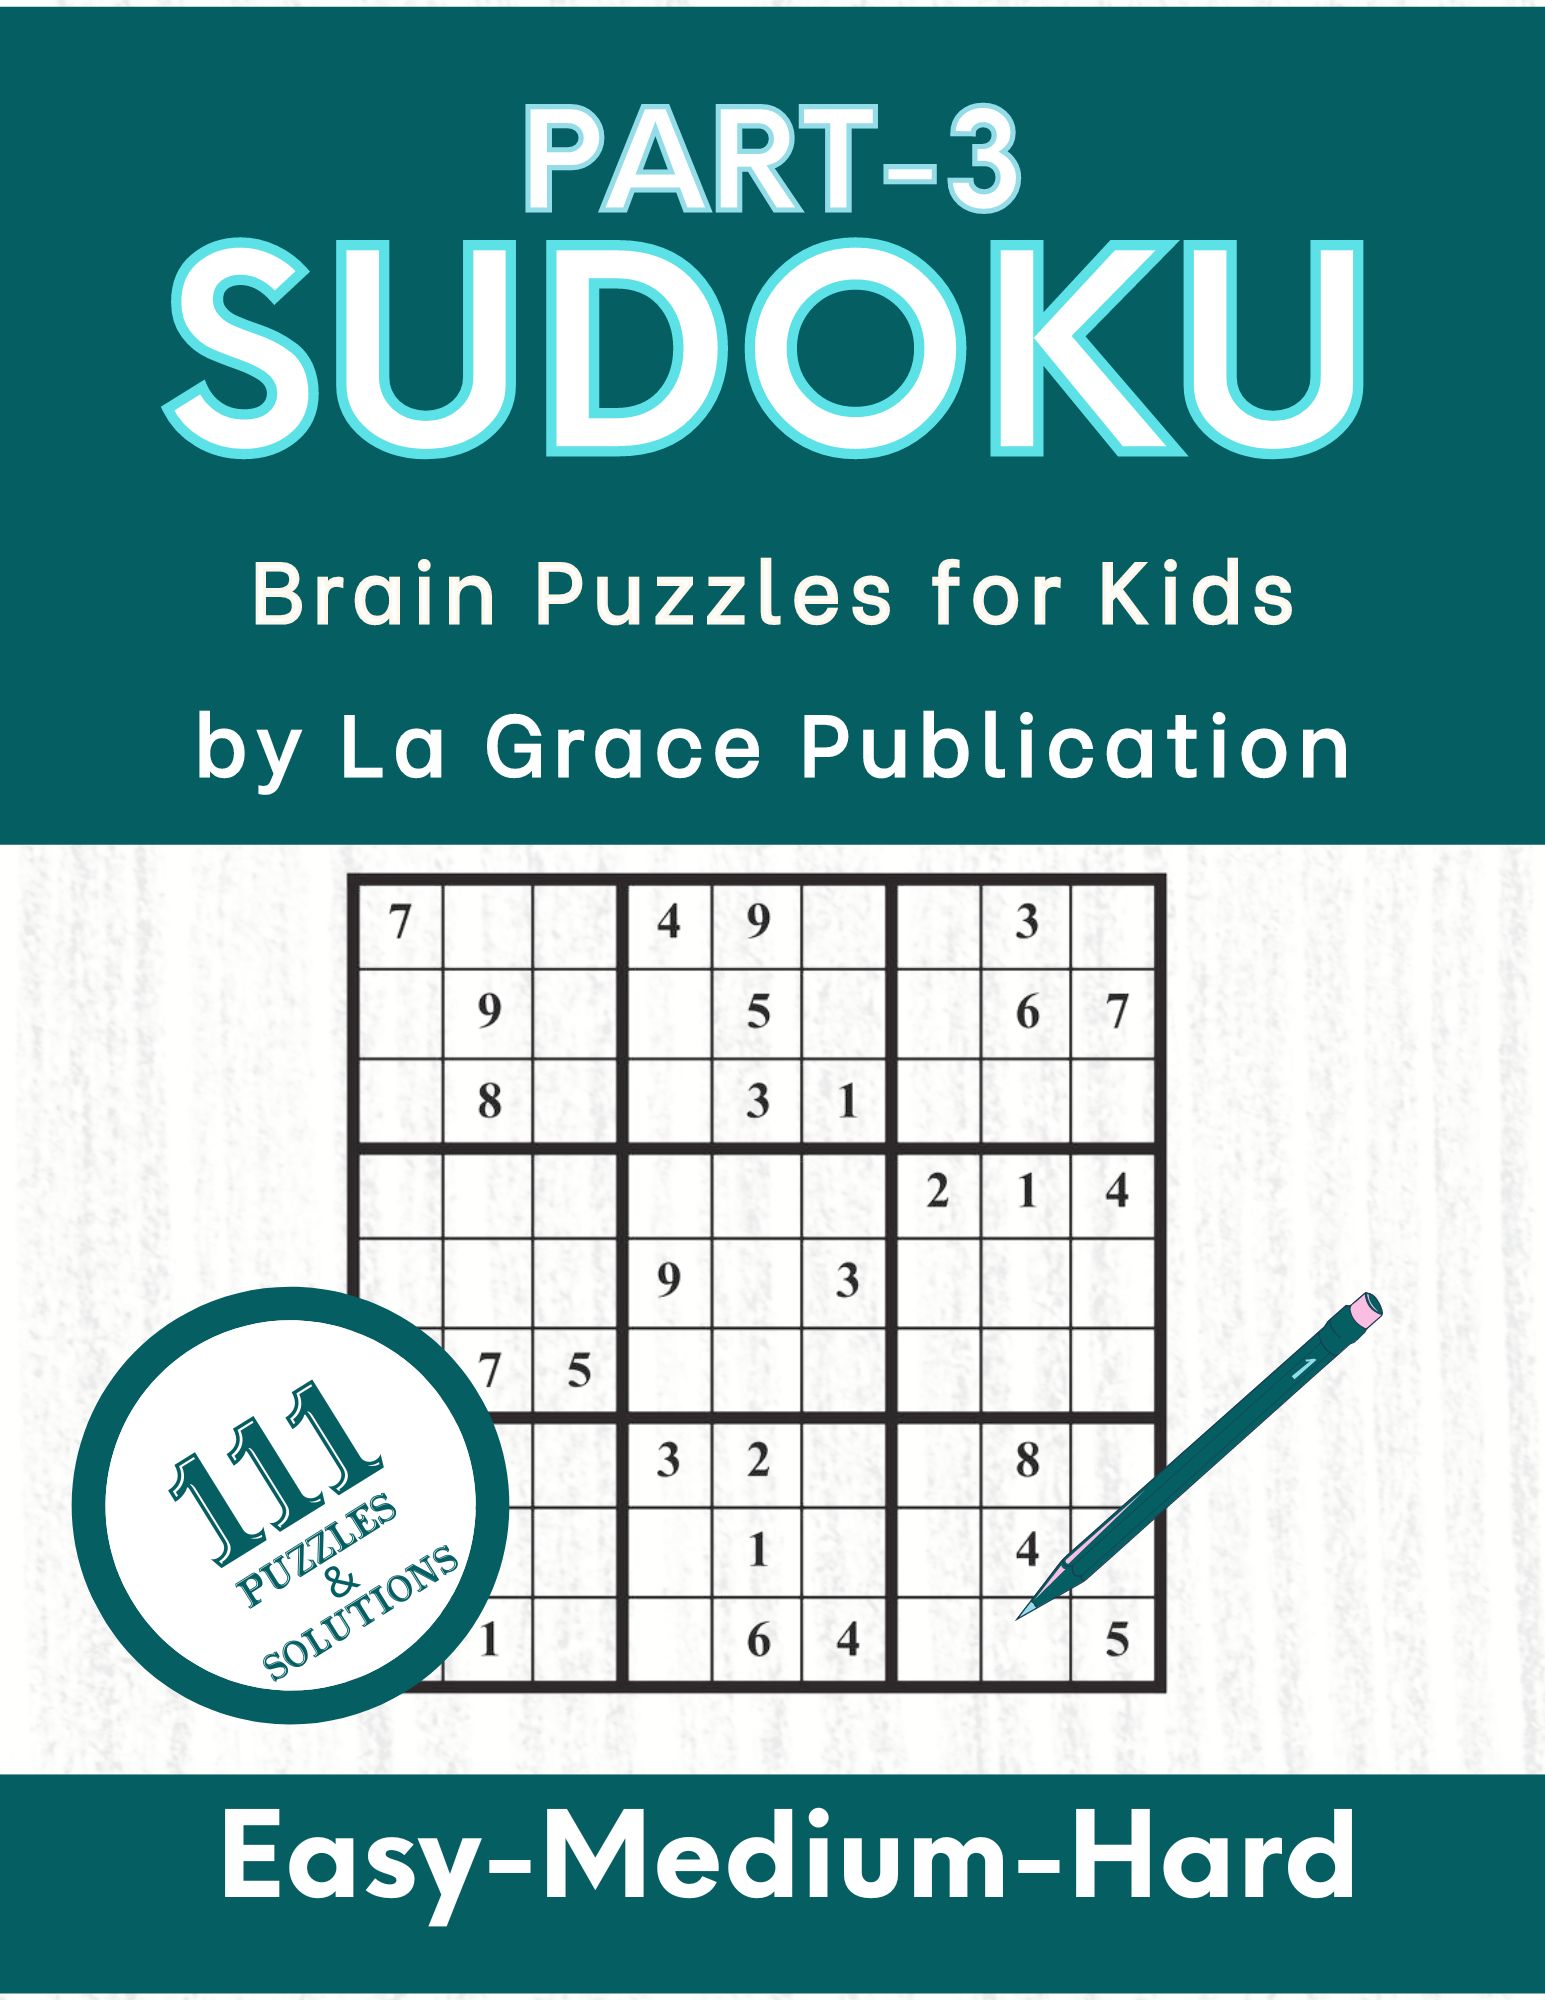 Free Printable Sudoku Puzzles for kids  Sudoku puzzles printables, Sudoku  puzzles, Sudoku printable